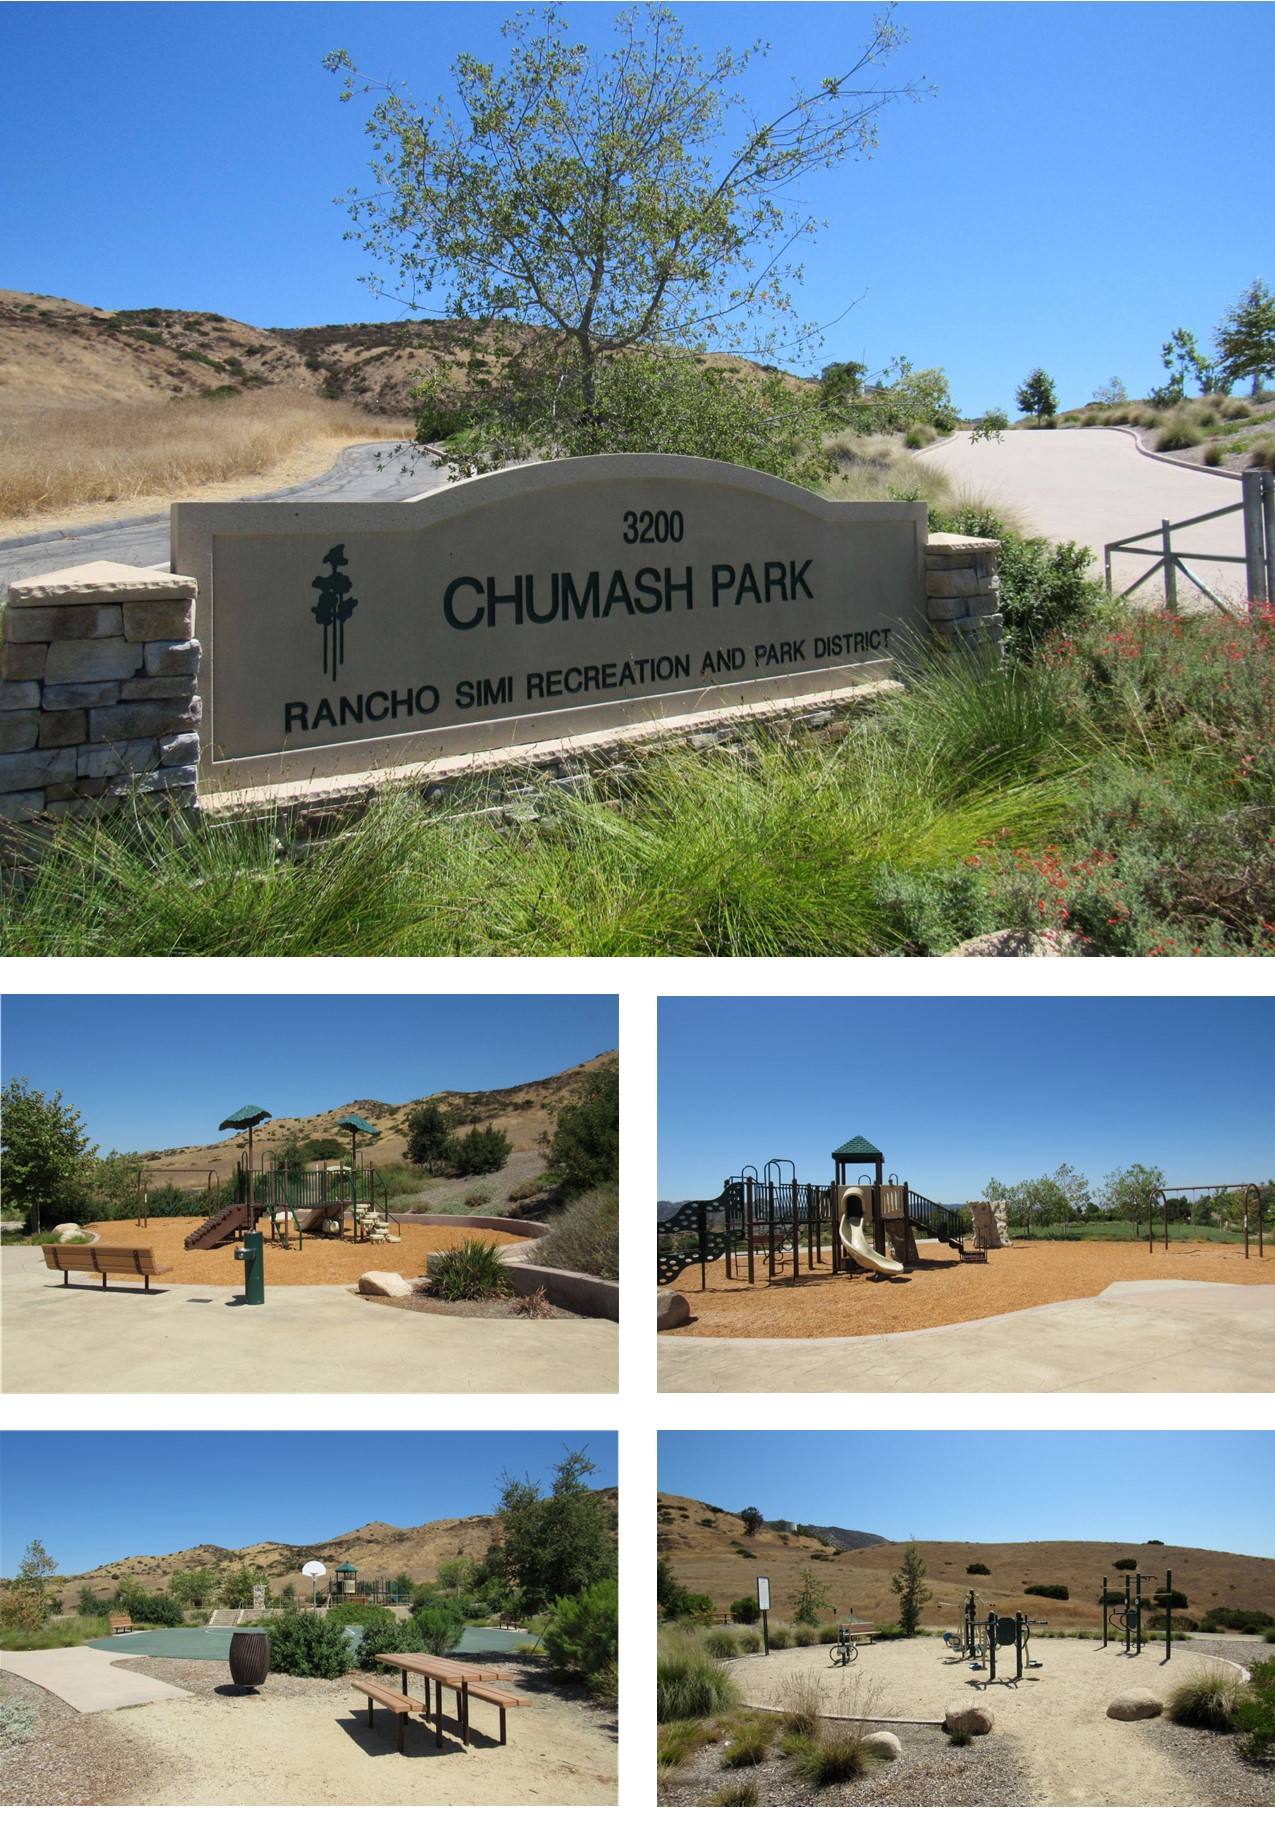 Chumash Park Collage